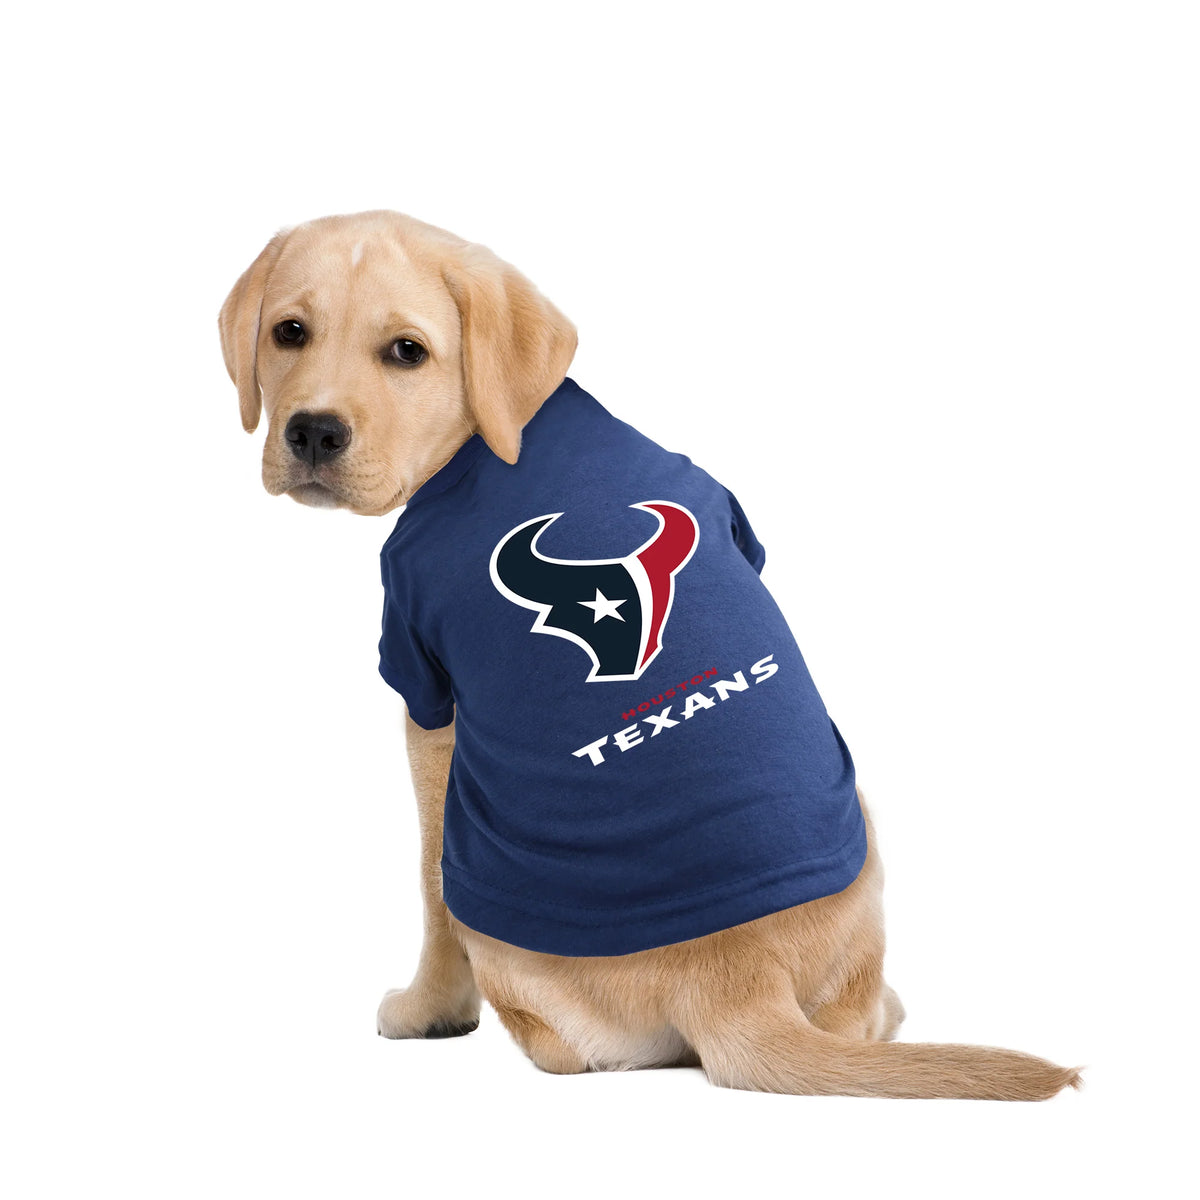 Houston Texans Tee Shirt